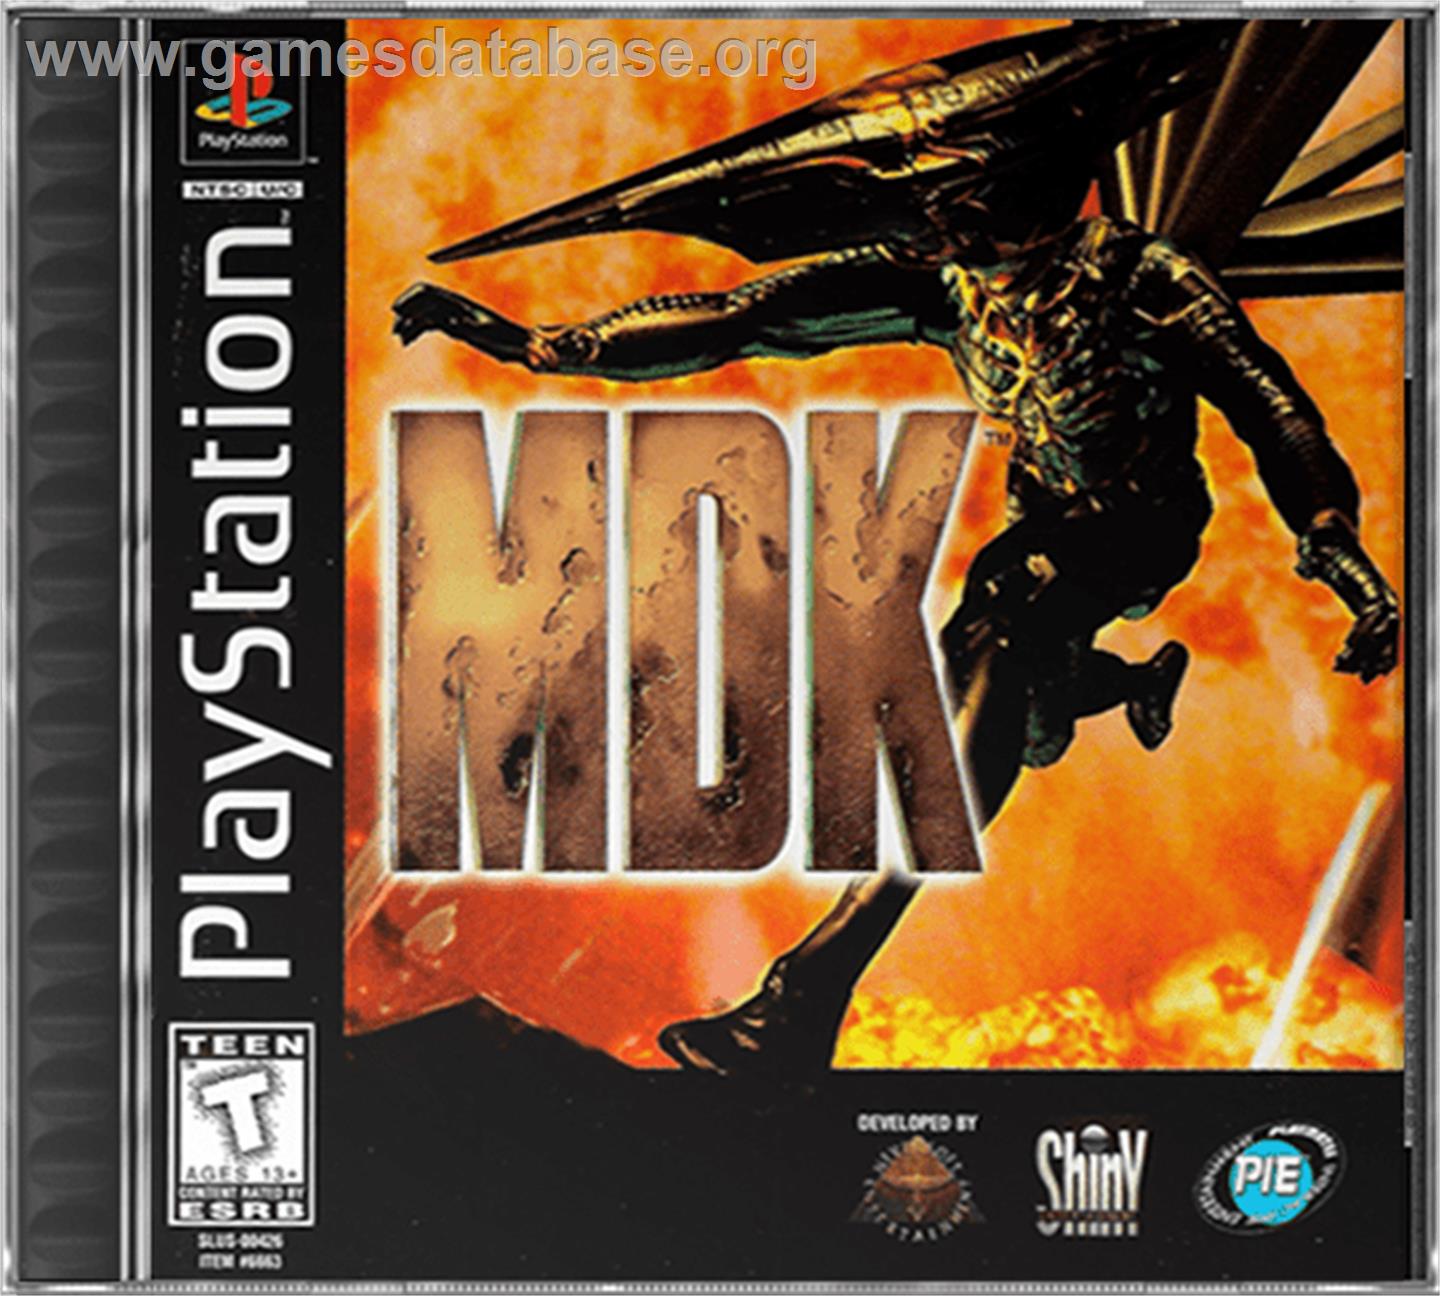 MDK - Sony Playstation - Artwork - Box